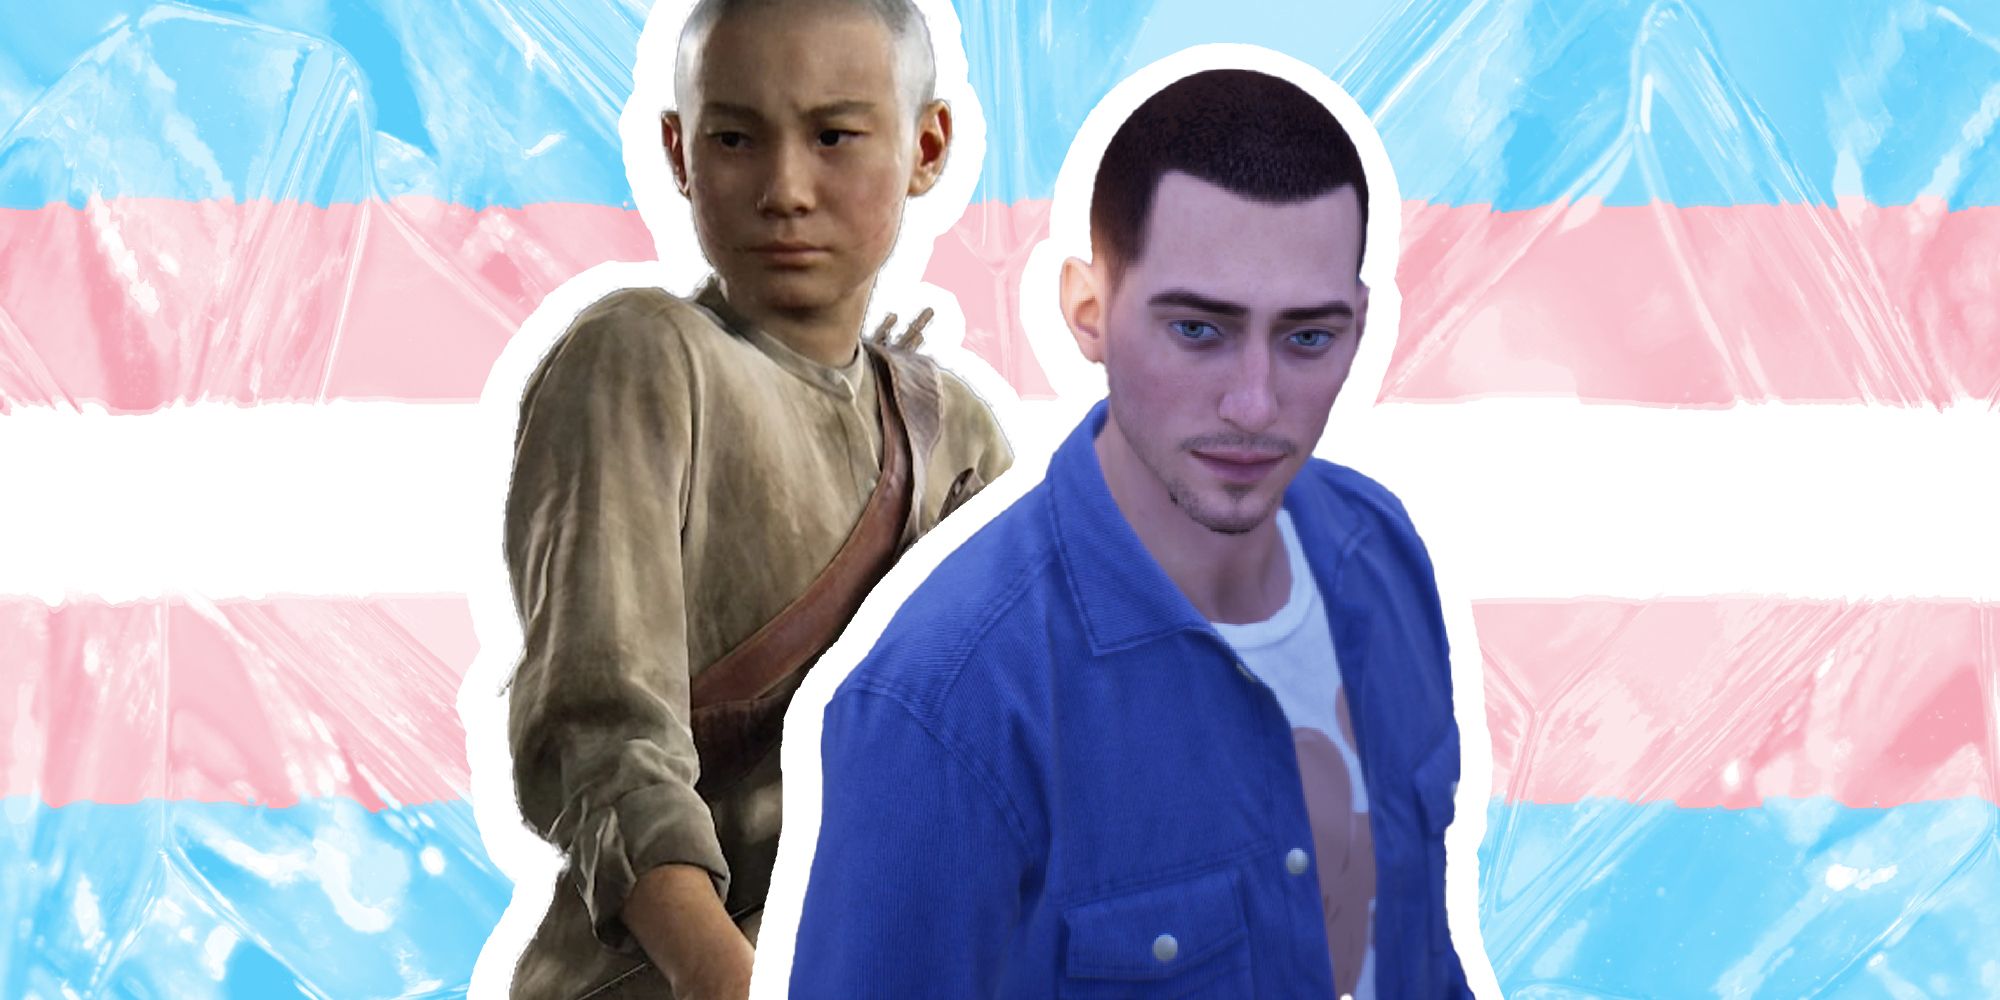 Meet Tyler Ronan, the first transgender triple-A video game protagonist